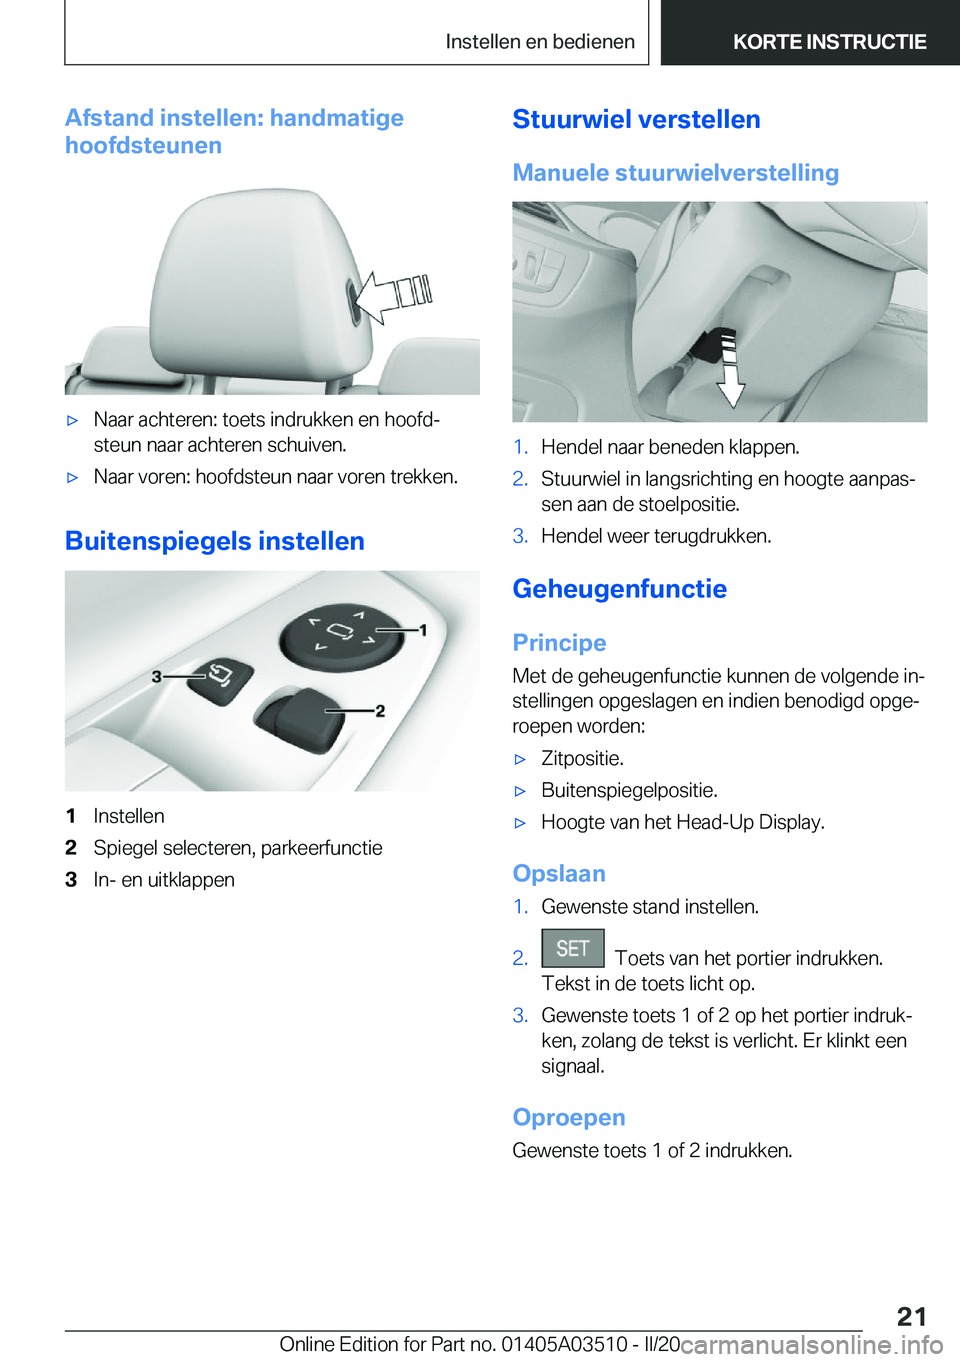 BMW X3 2020  Instructieboekjes (in Dutch) �A�f�s�t�a�n�d��i�n�s�t�e�l�l�e�n�:��h�a�n�d�m�a�t�i�g�e
�h�o�o�f�d�s�t�e�u�n�e�n'x�N�a�a�r��a�c�h�t�e�r�e�n�:��t�o�e�t�s��i�n�d�r�u�k�k�e�n��e�n��h�o�o�f�dj �s�t�e�u�n��n�a�a�r��a�c�h�t